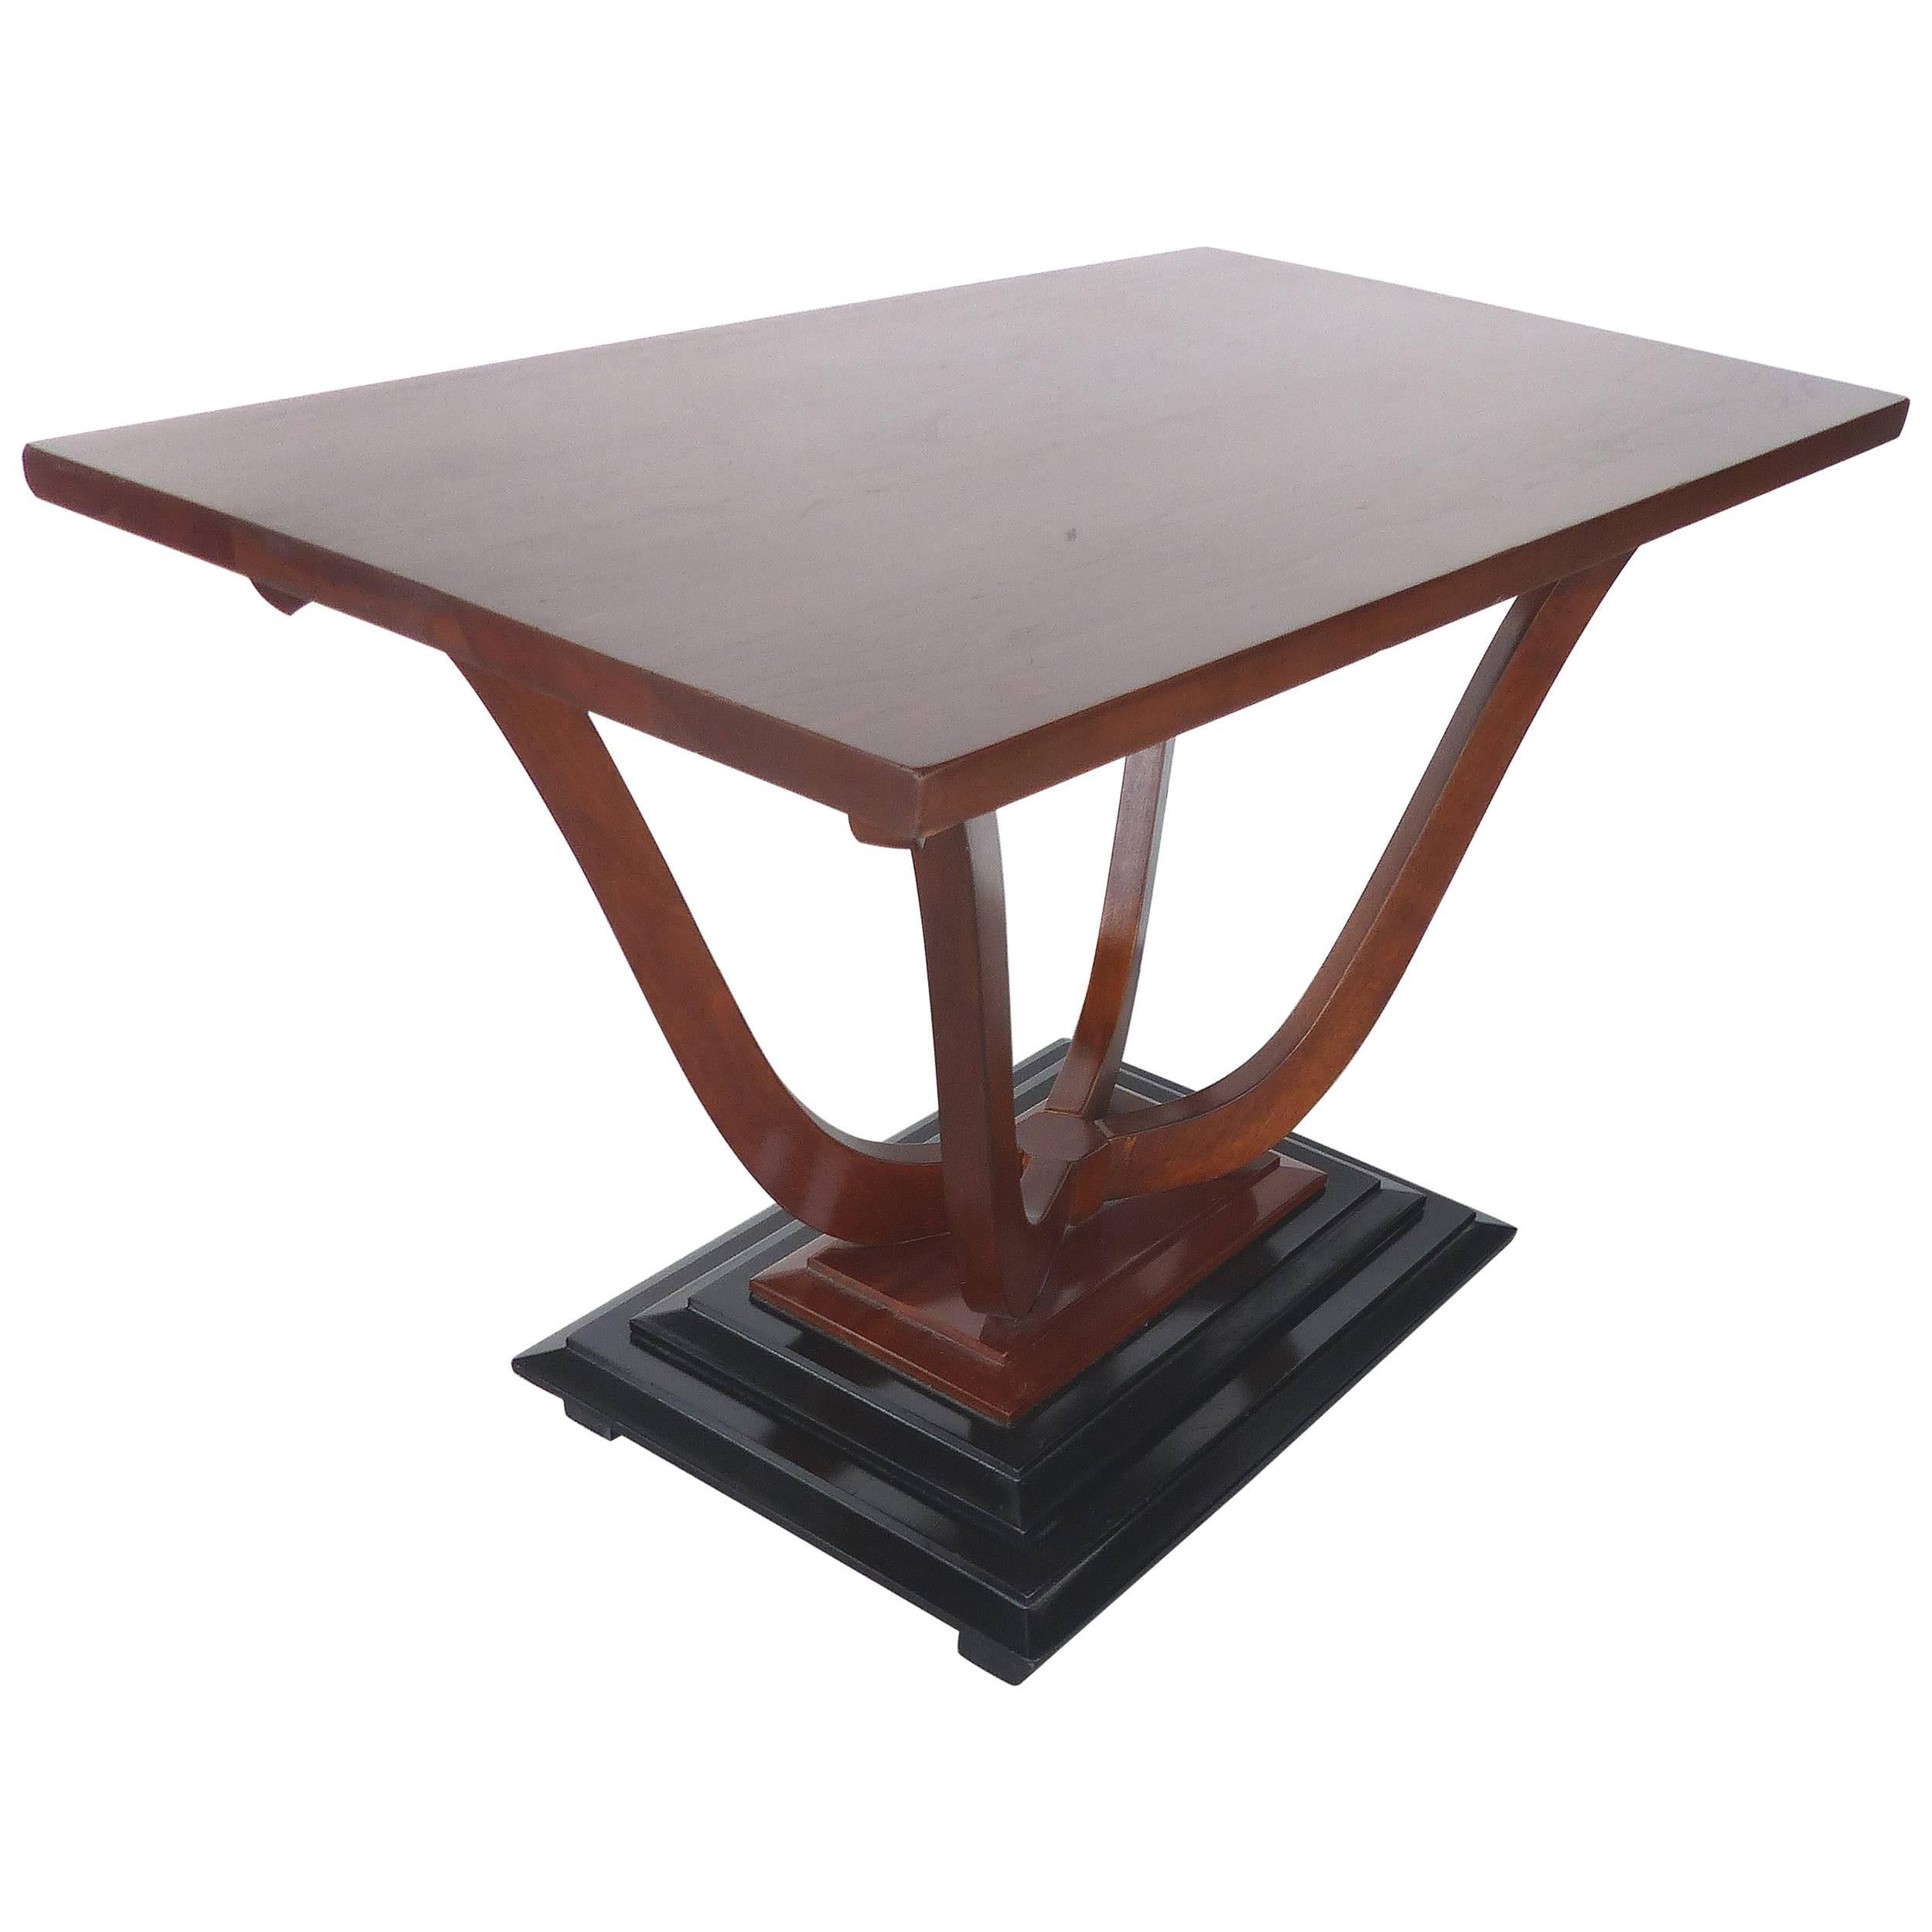 Art Deco David Robertson Smith Dynamique Johnson Furniture Coffee Table